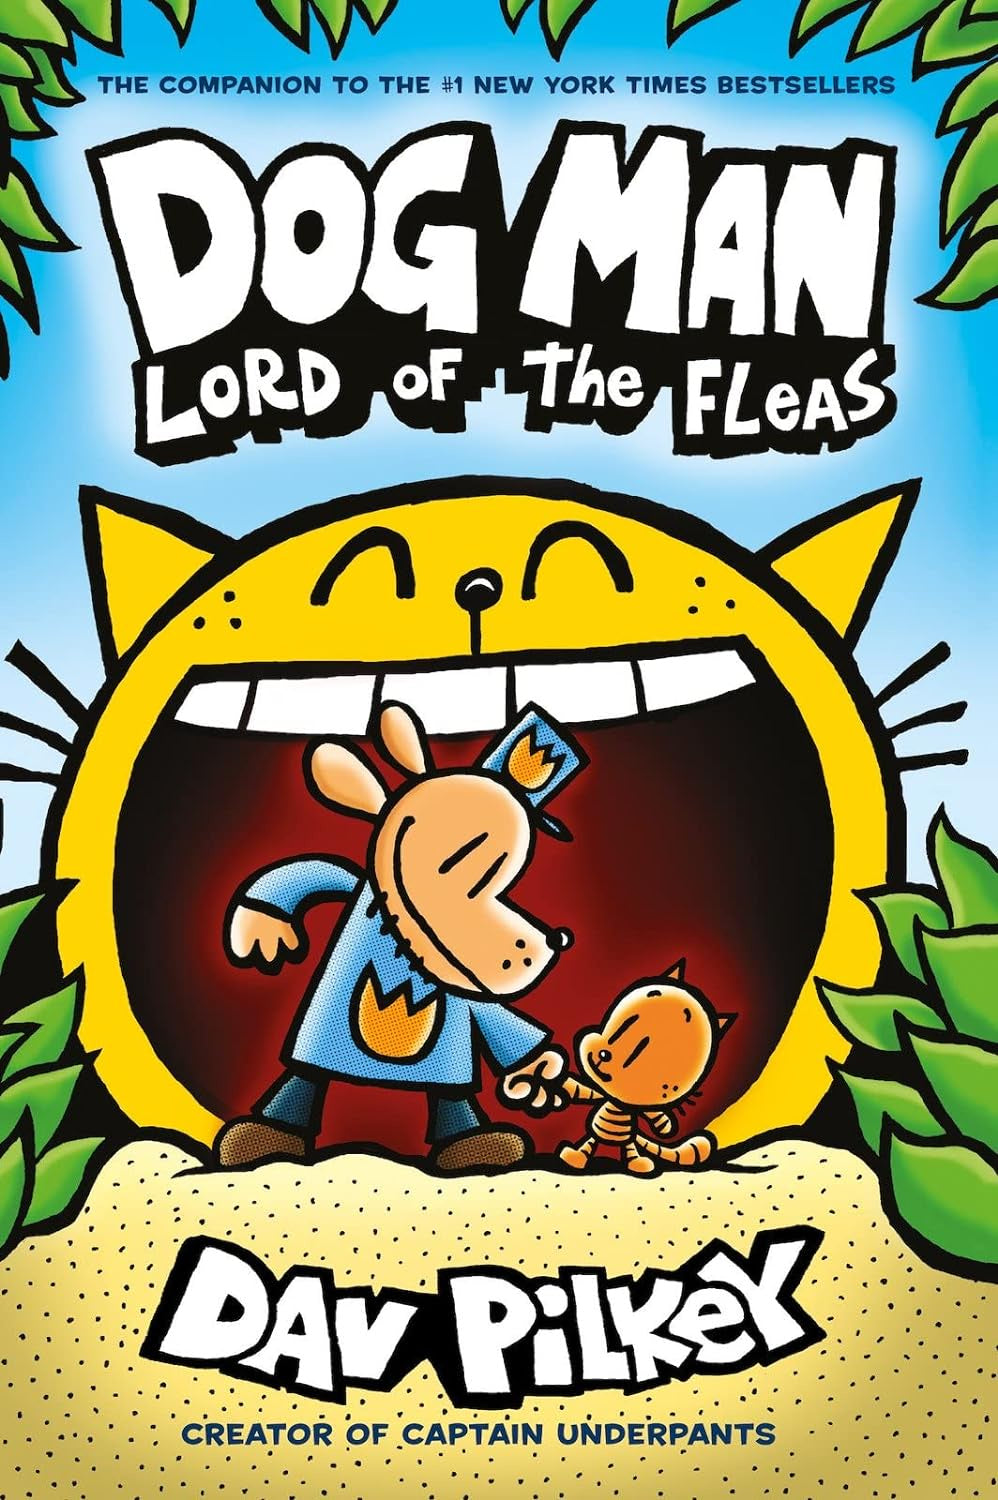 Dog Man Lord of the Fleas by Dav Pilkey